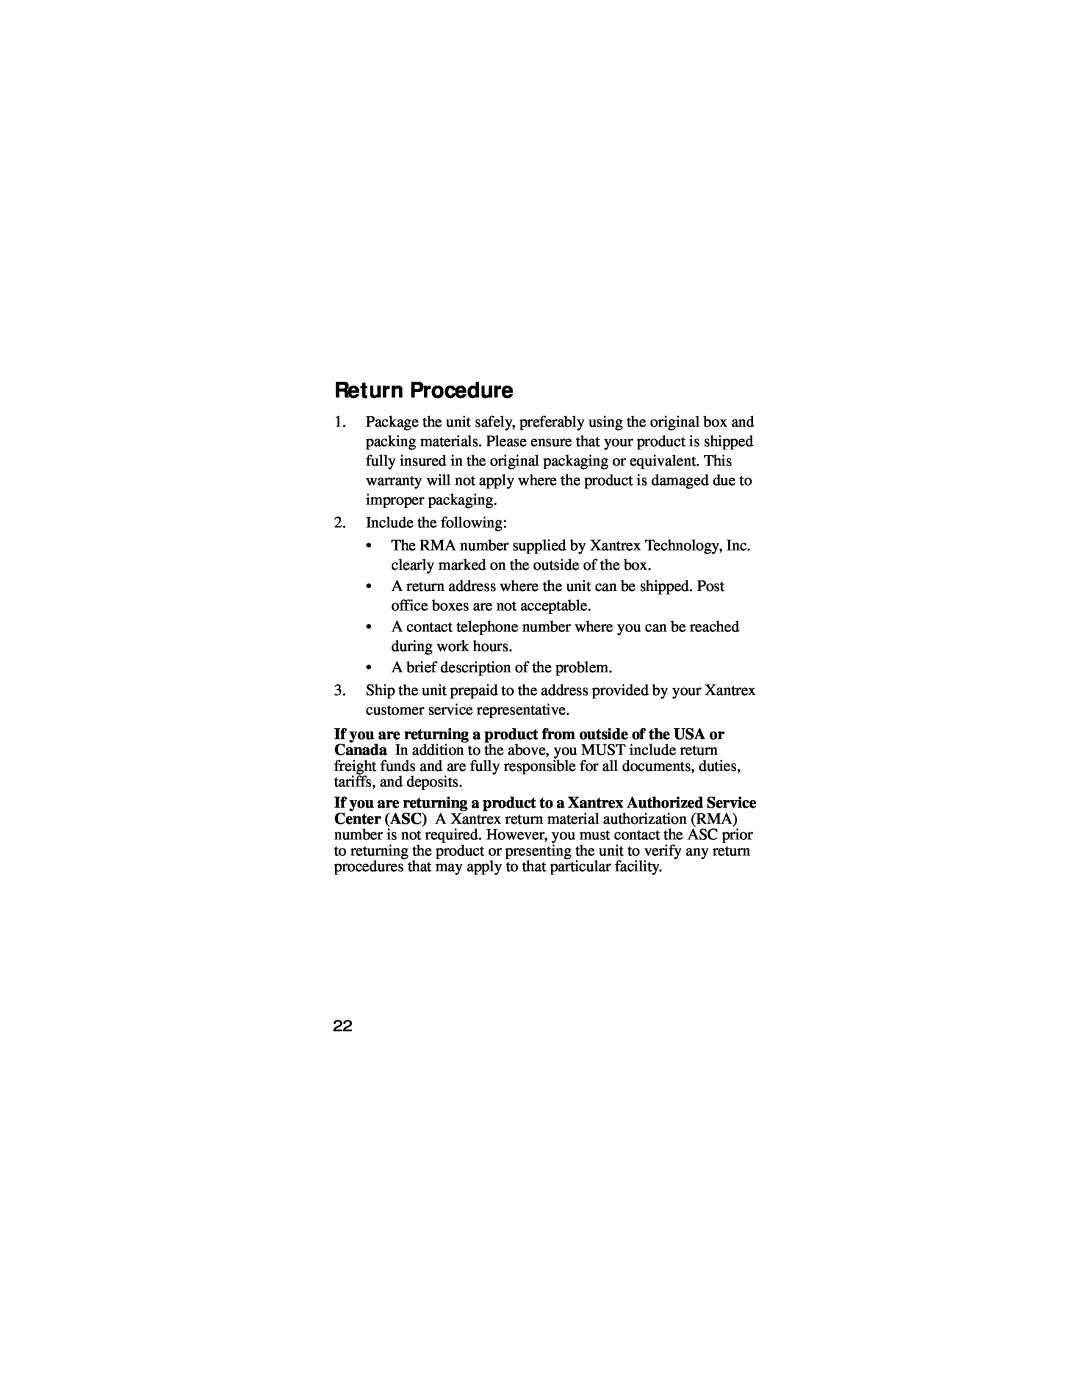 Xantrex Technology 150 manual Return Procedure 